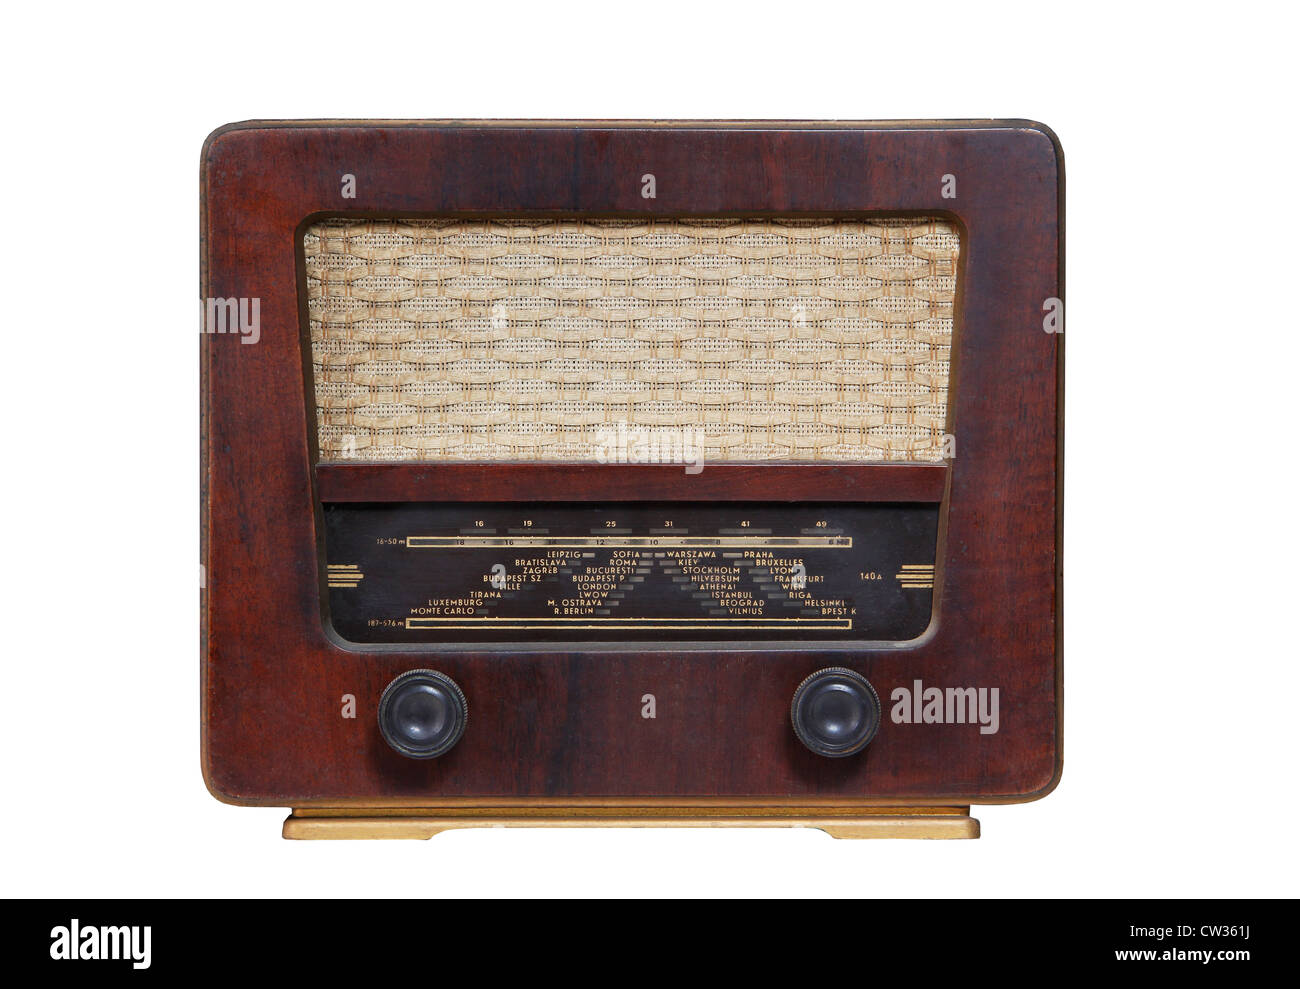 vintage radio isolated on the white background Stock Photo